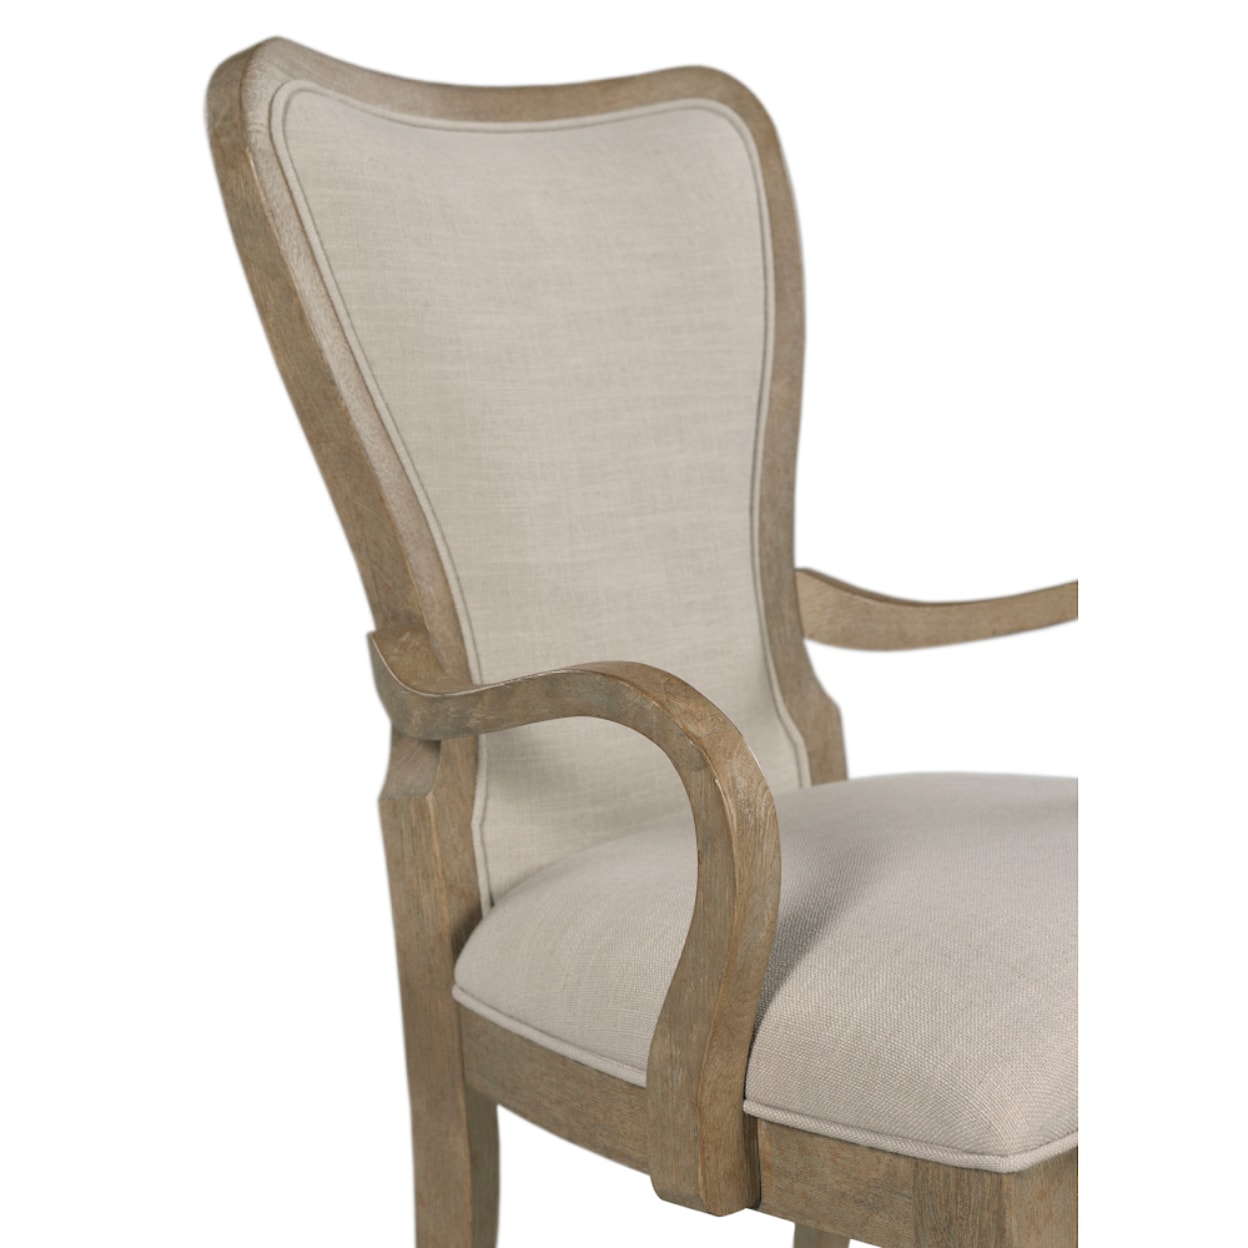 Kincaid Furniture Urban Cottage Merritt Upholstered Arm Chair